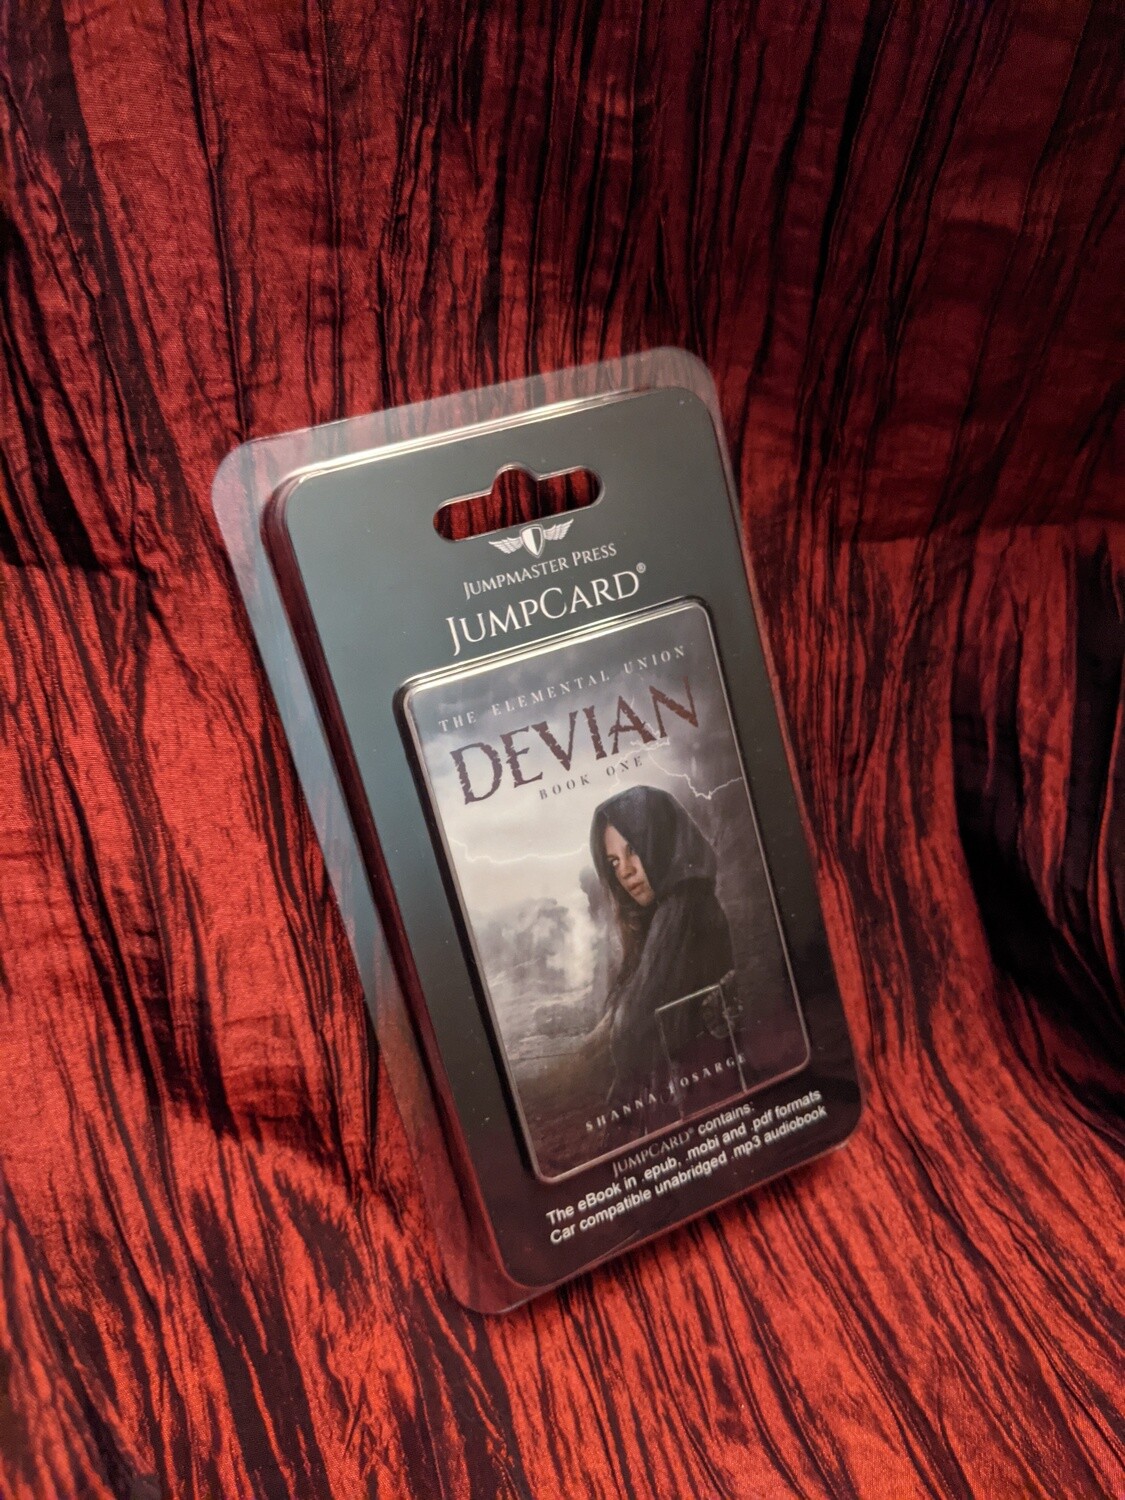 Devian - Audiobook on Jumpcard